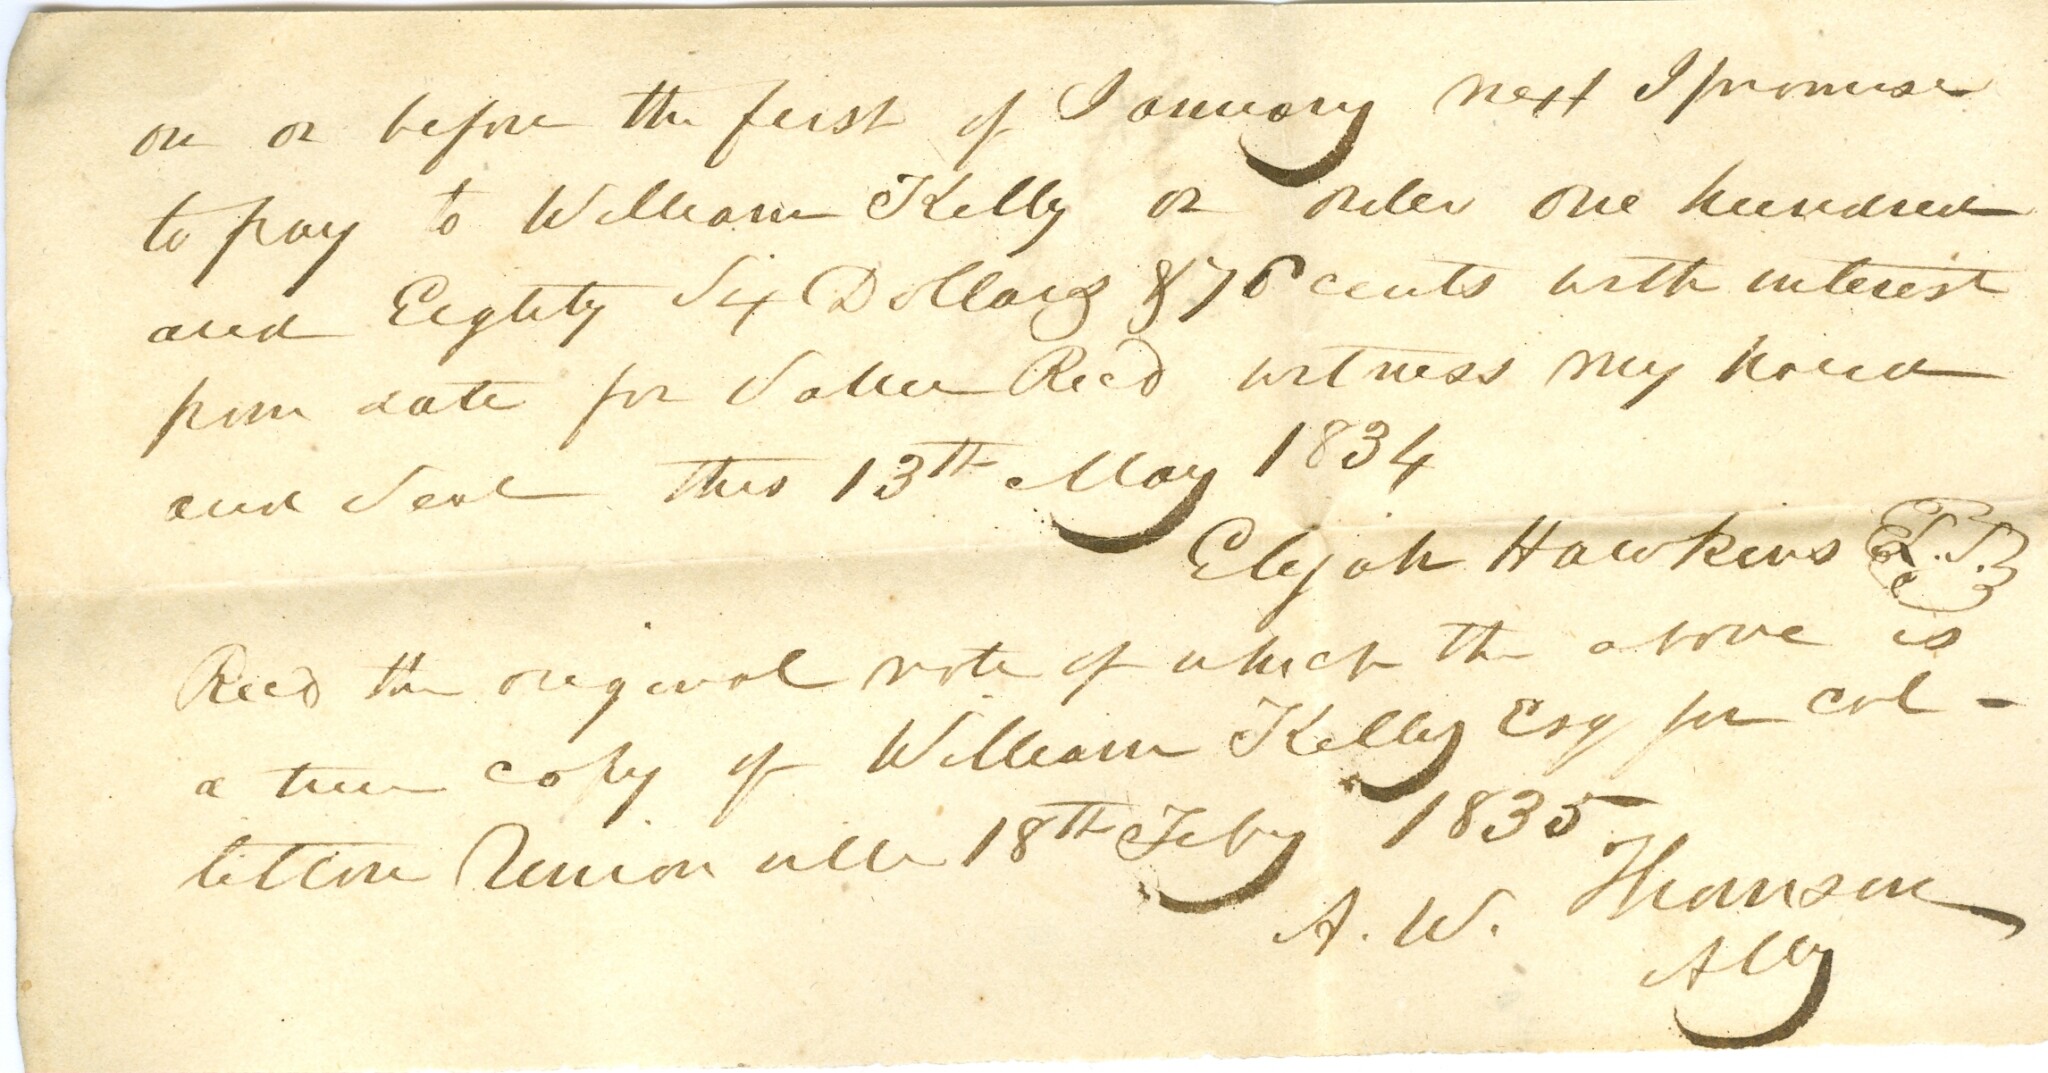 Elijah Hawkins Note to Wm. Kelly 1834 and A.W. Thomson